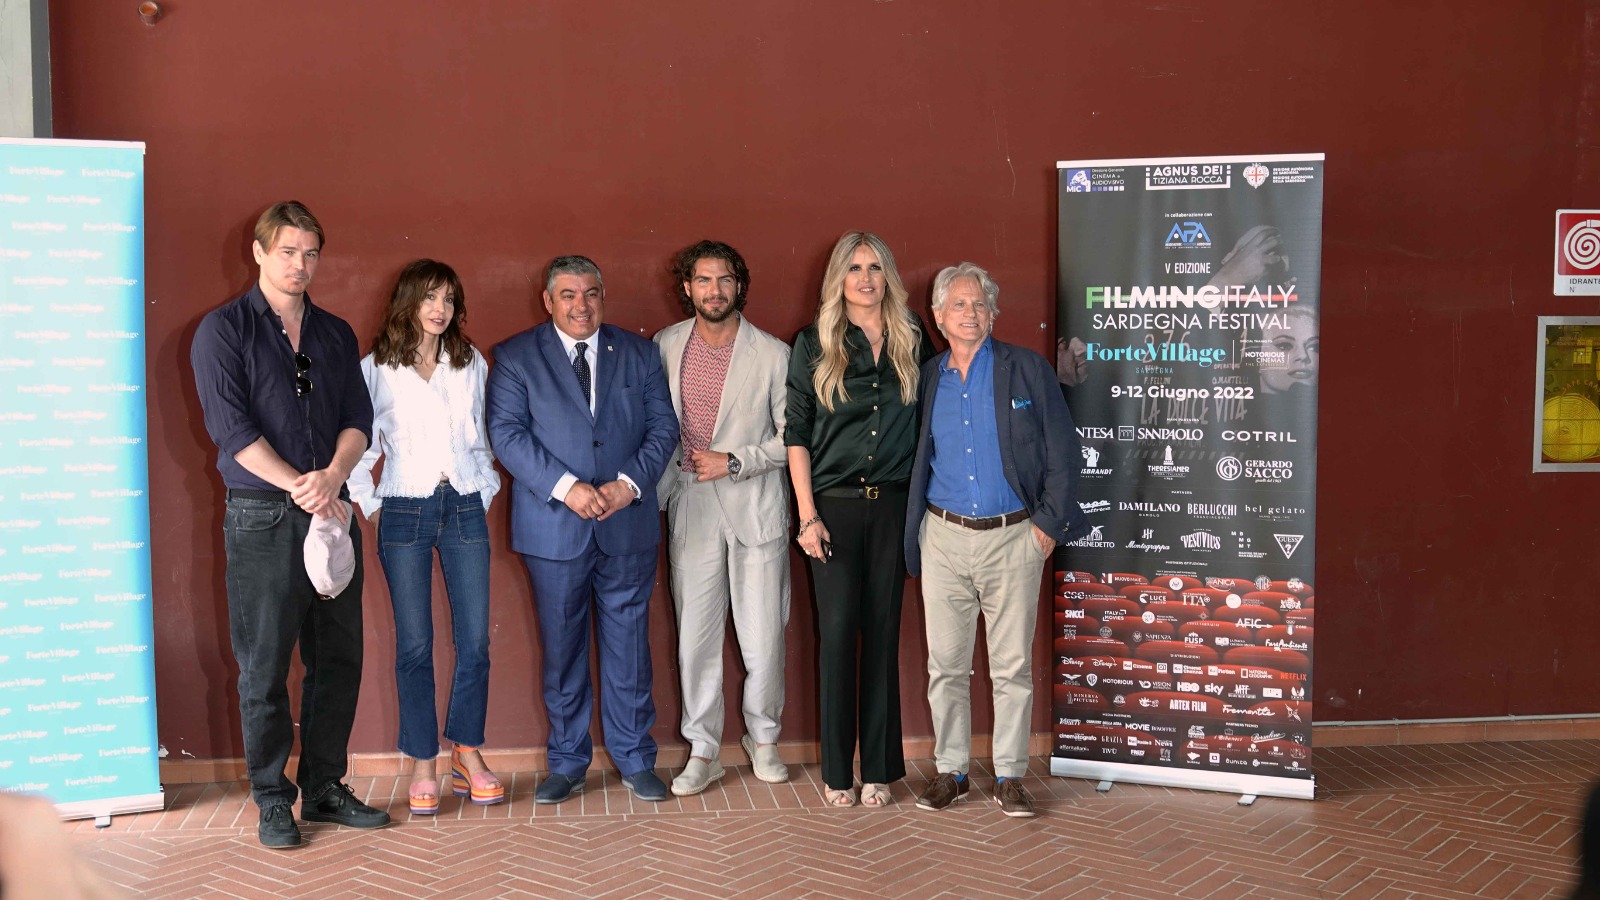 Cinema, al via il Filming Italy Sardegna Festival